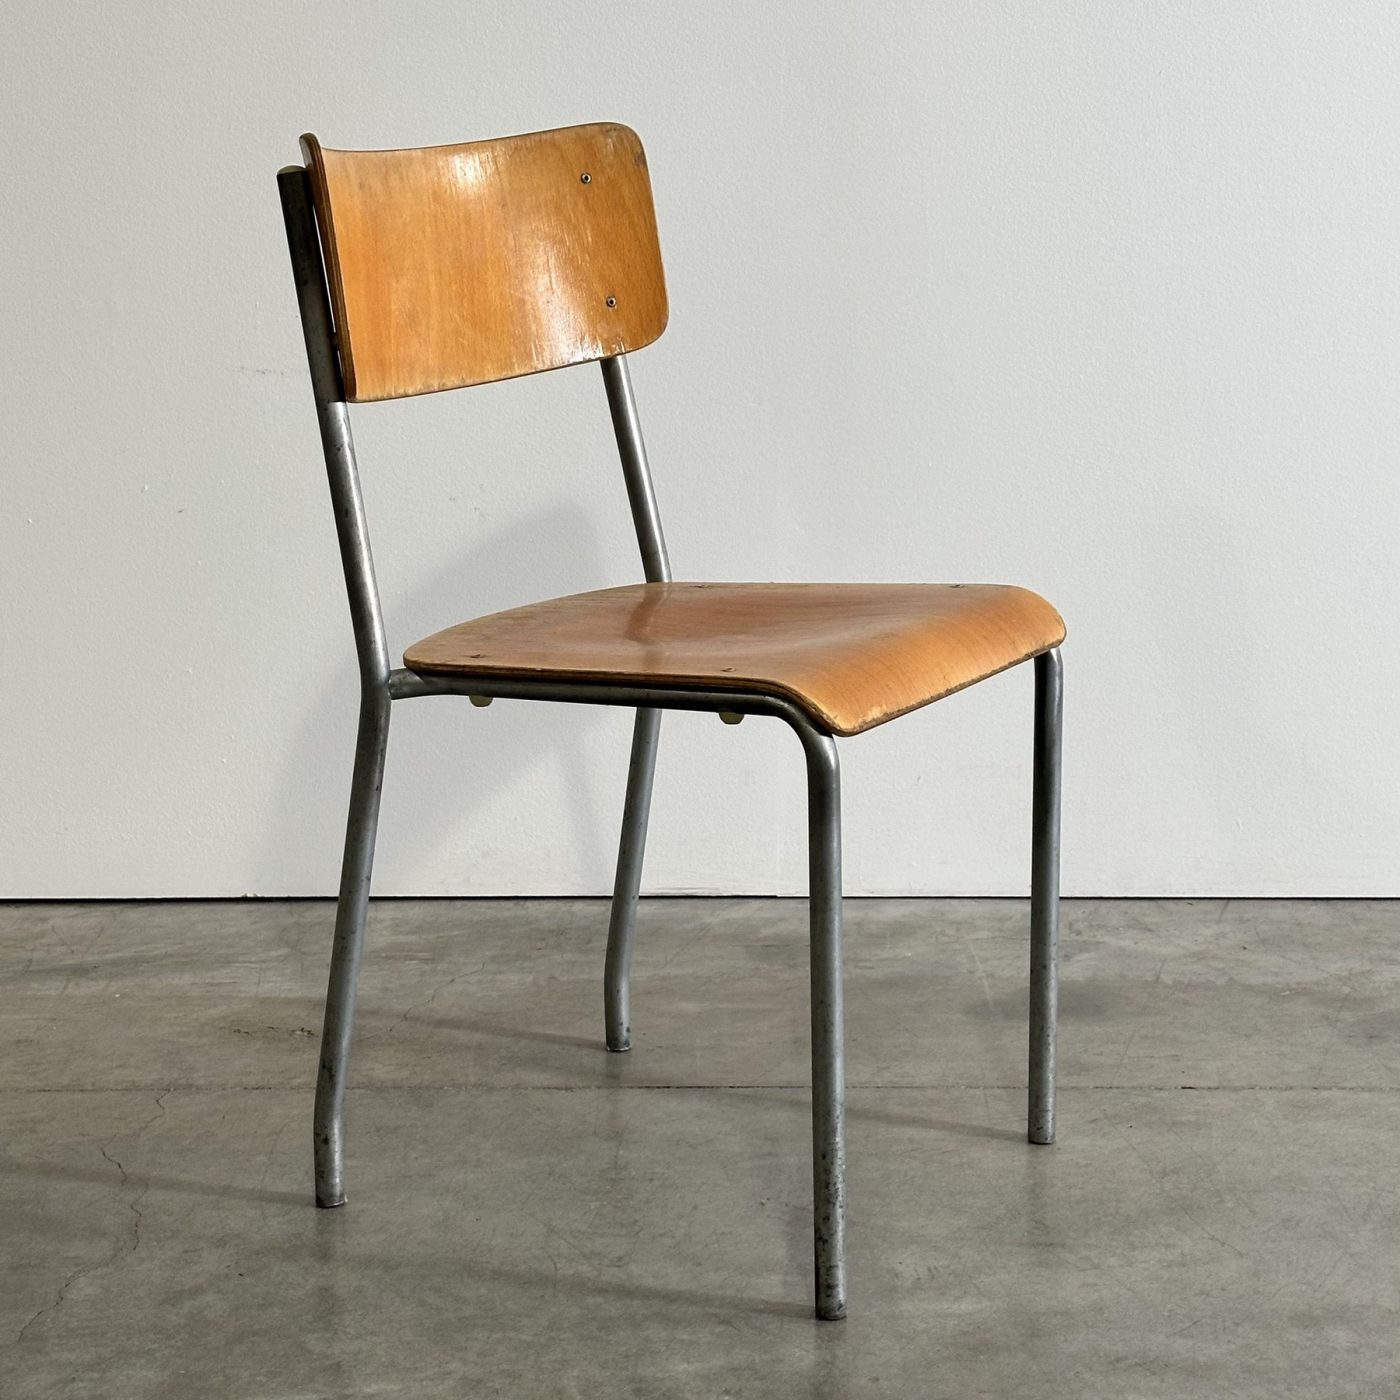 objet-vagabond-school-chairs0006